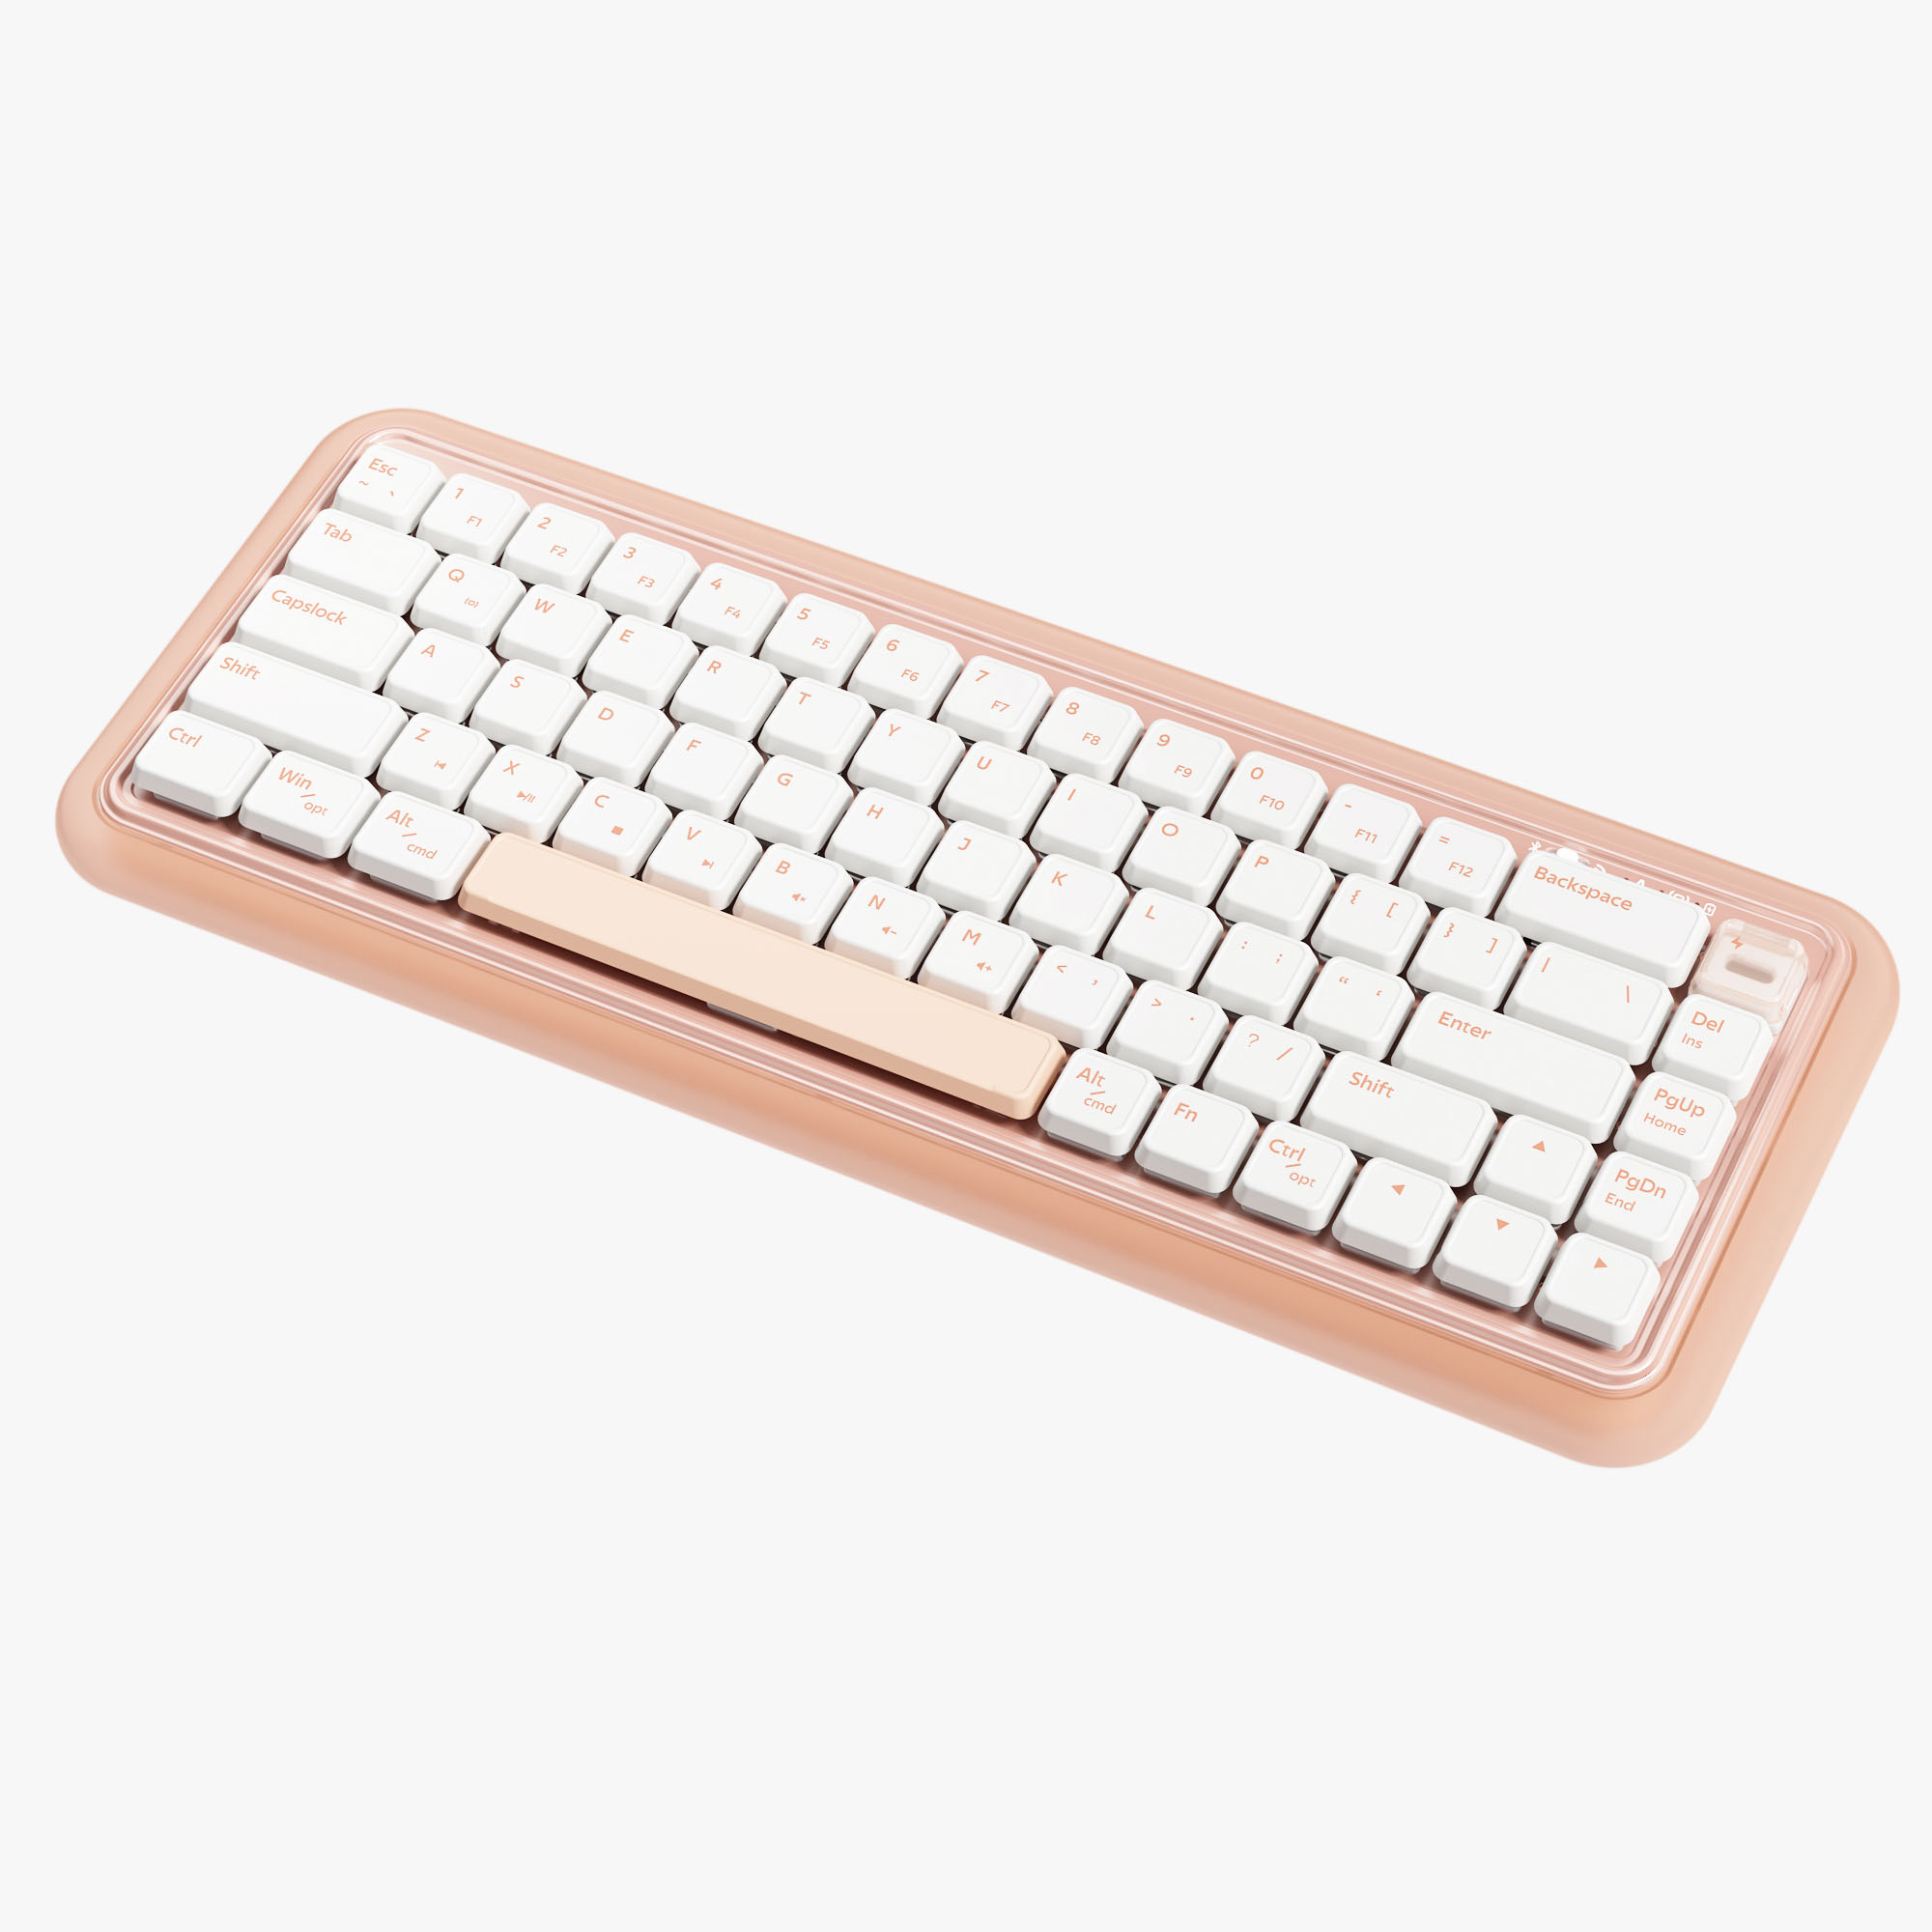 The Glamorous Pink Mechanical Keyboard | Durgod S230